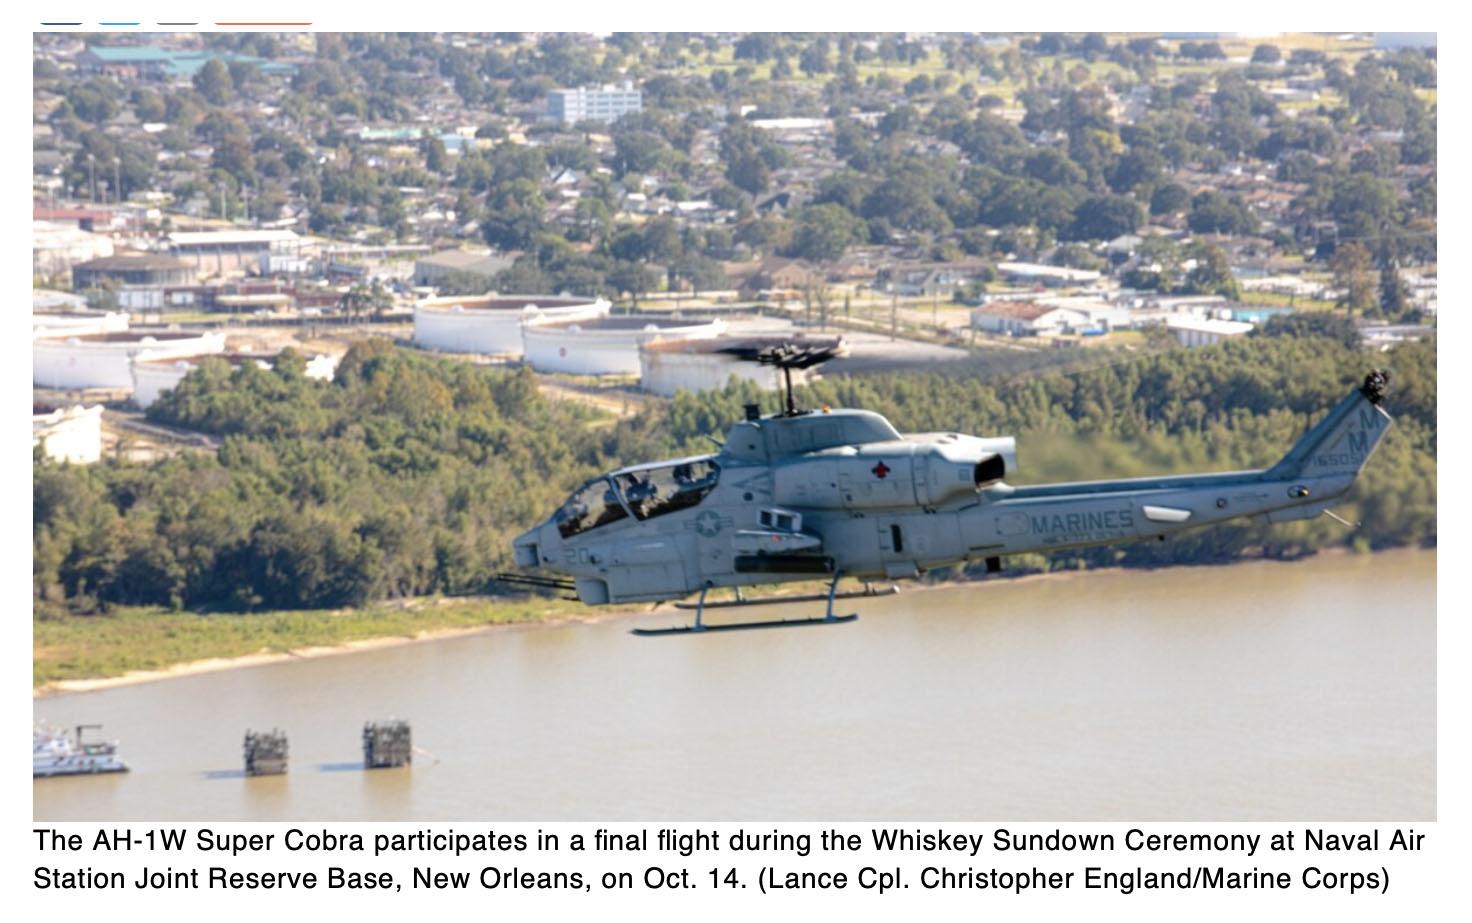  Marine Corps says goodbye to the Super Cobra